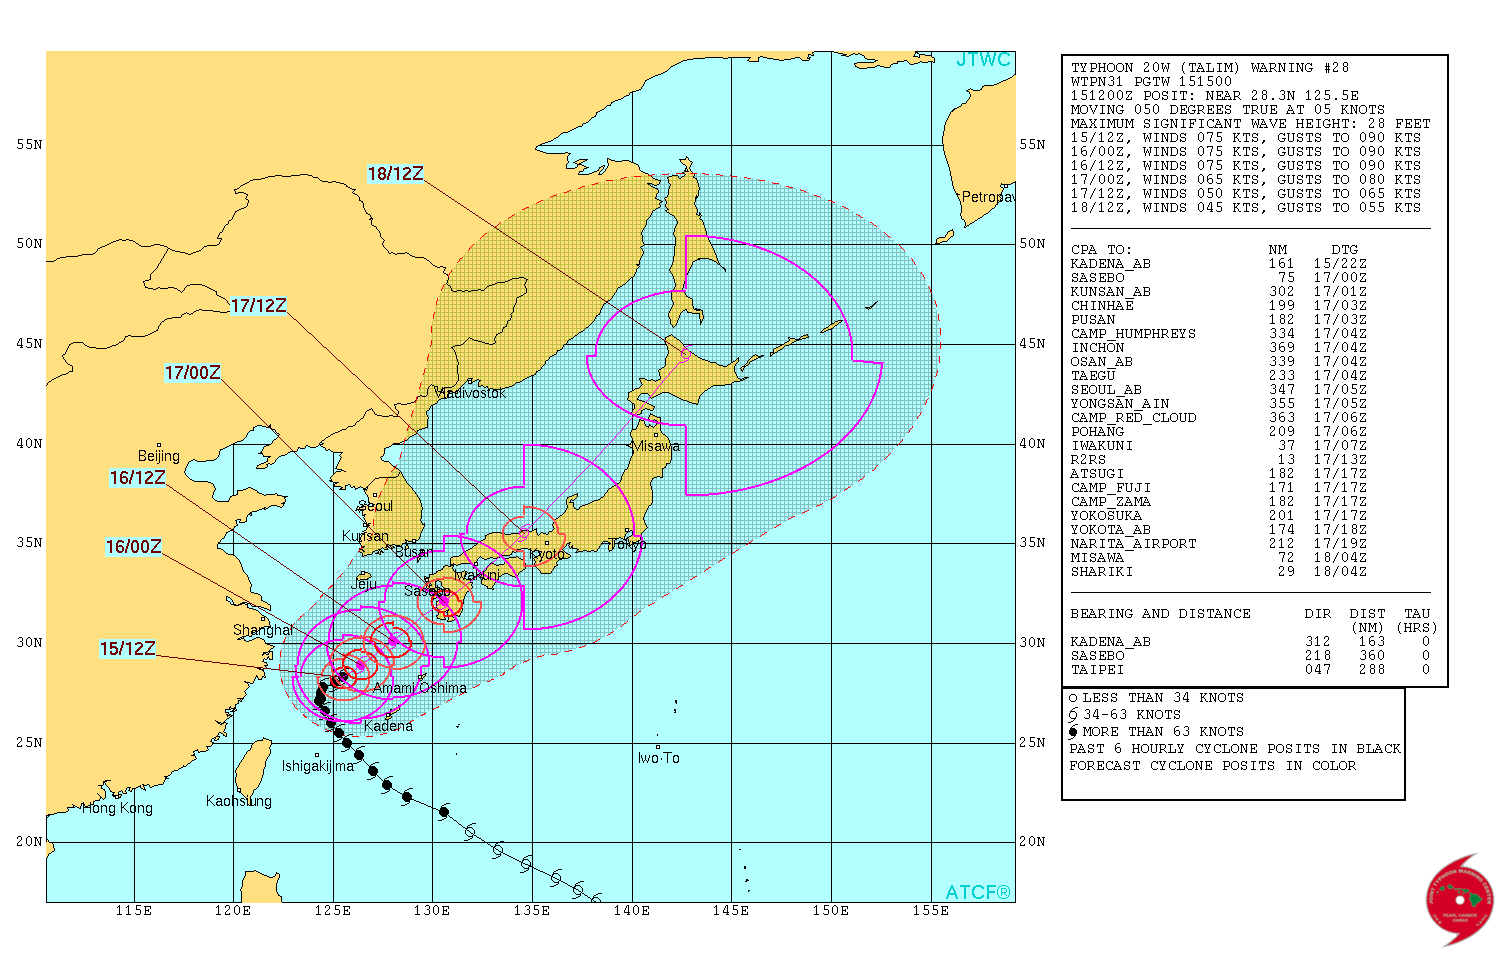 Typhoon Talim forecast track by JTWC on September 15, 2017